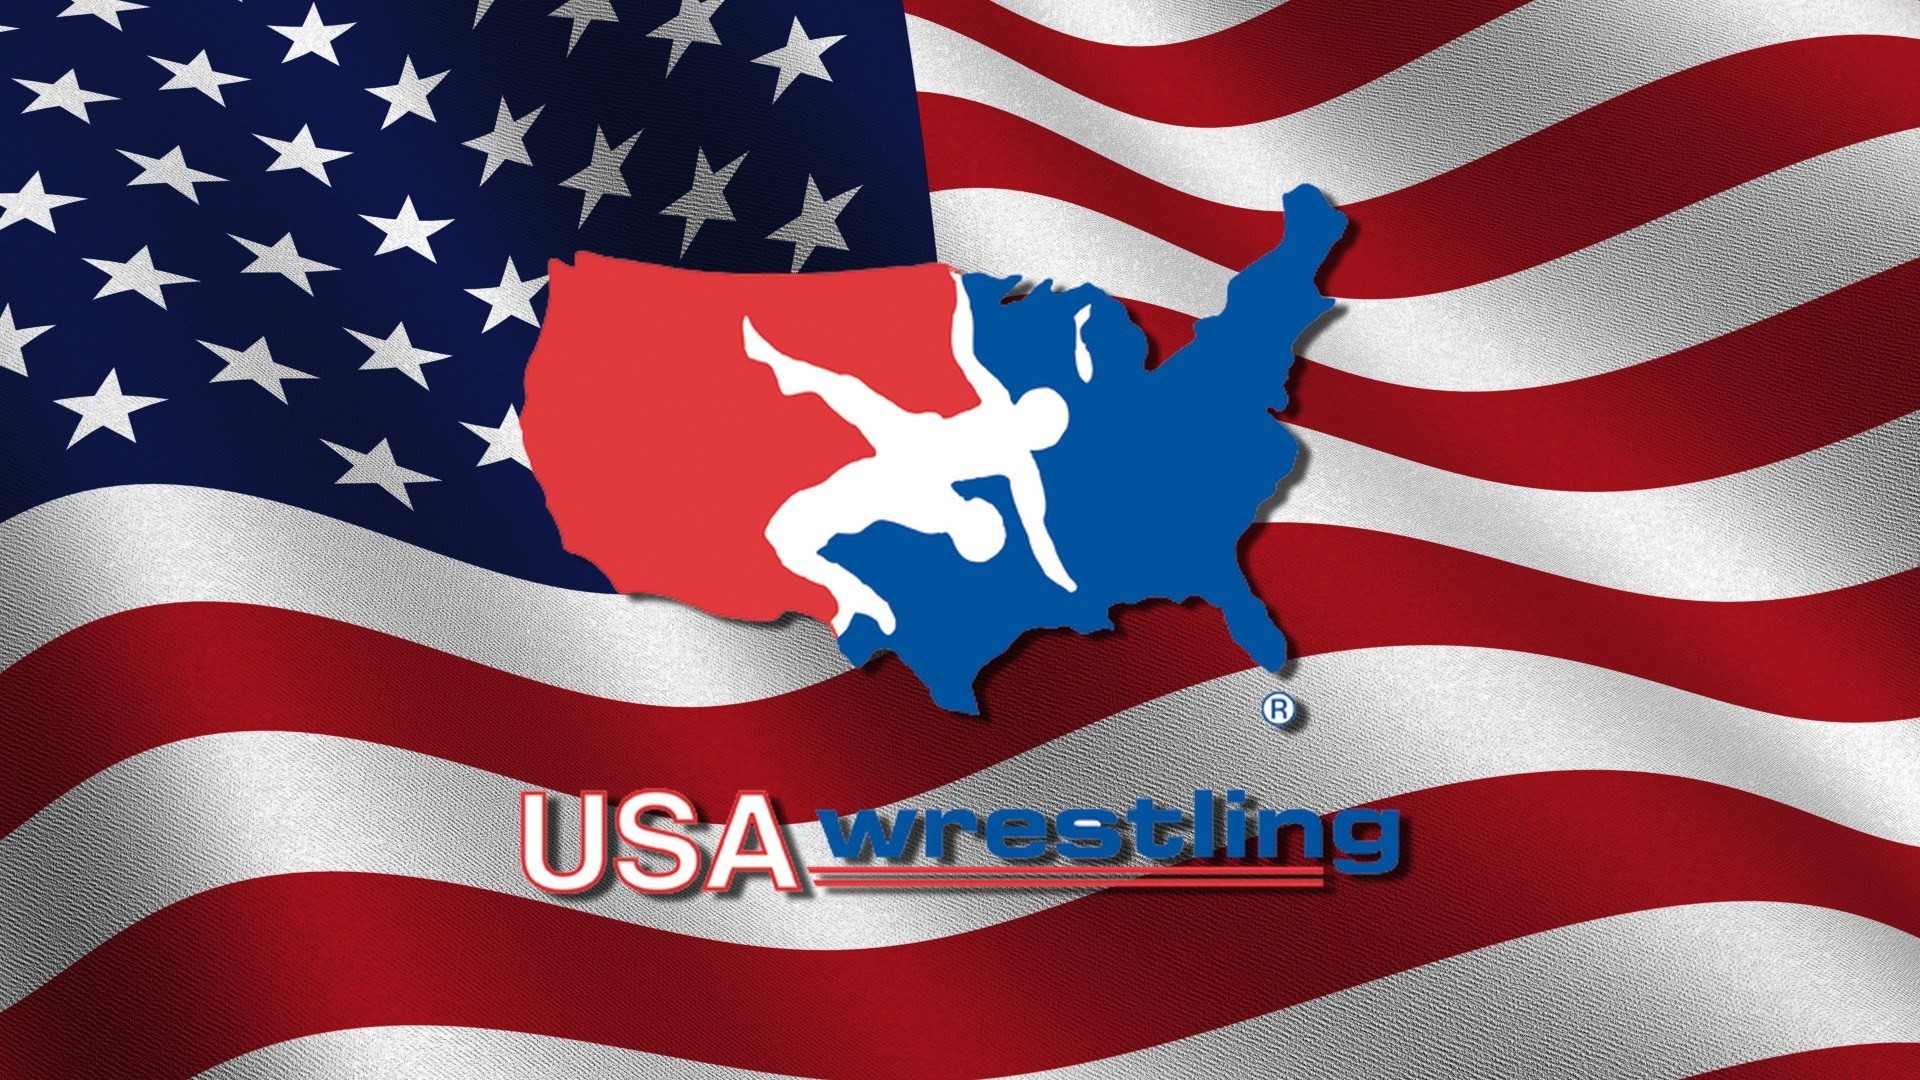 USA Wrestling Wallpaper (66+ images)